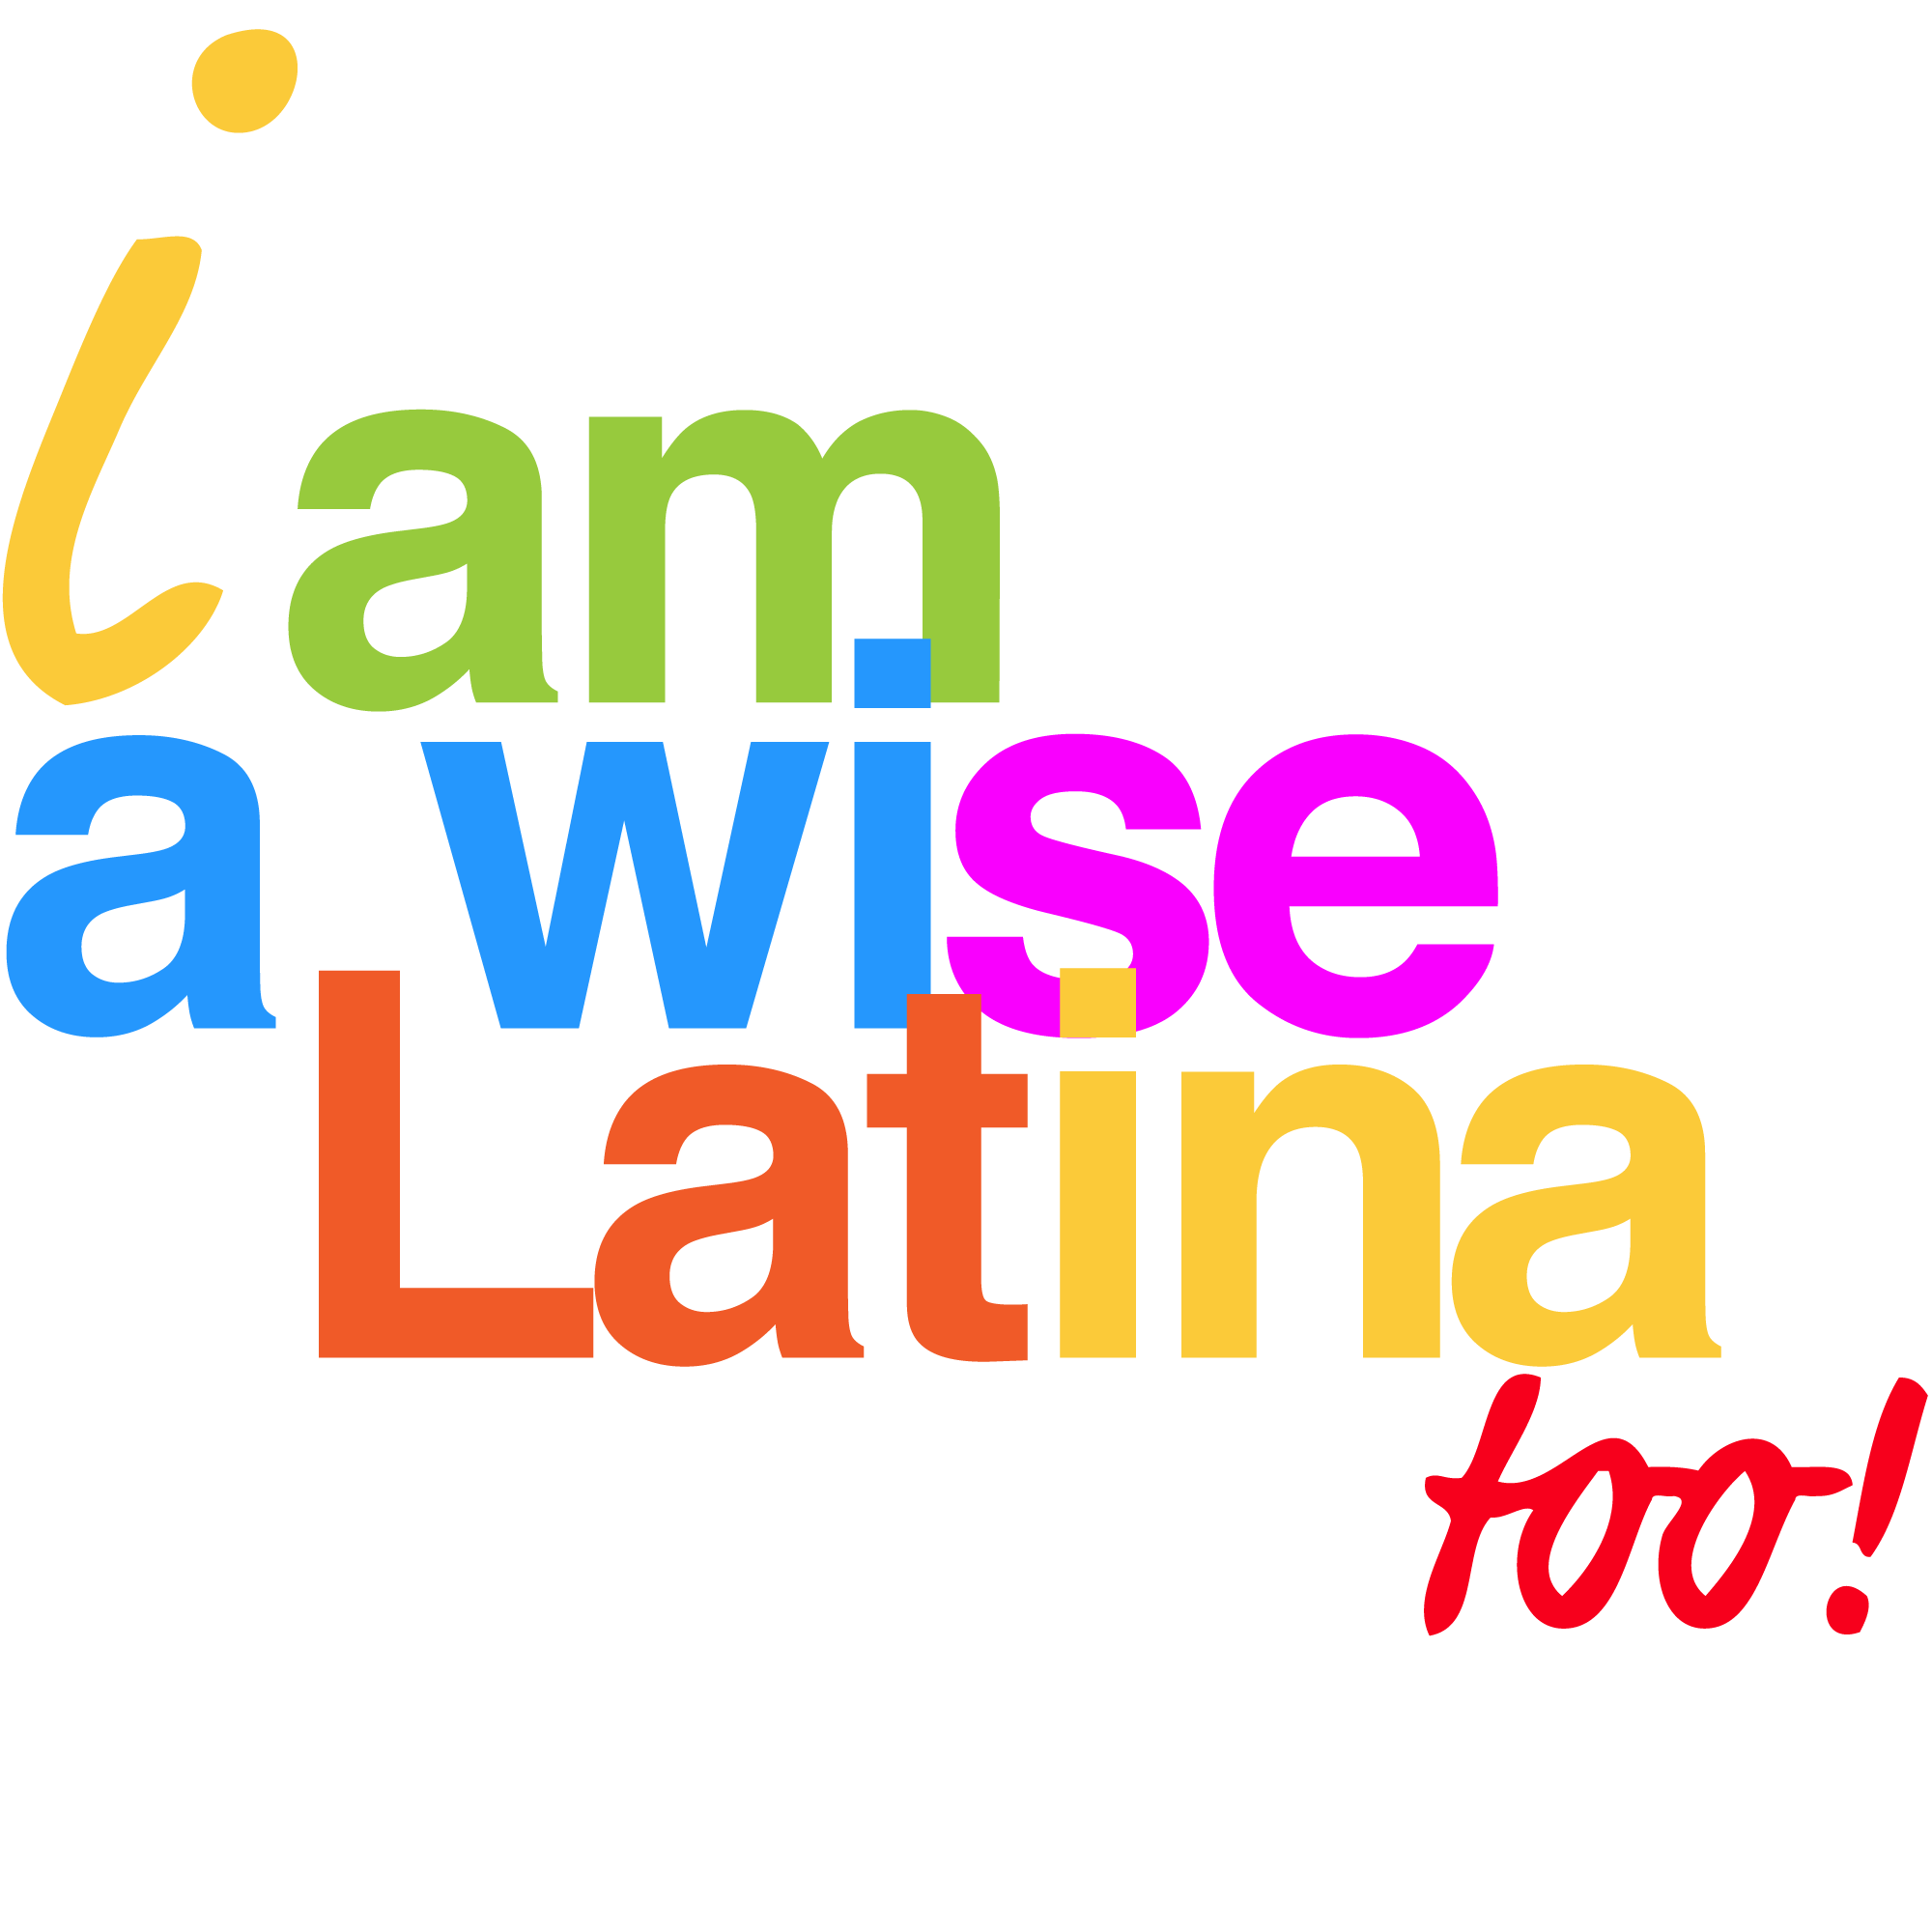 I am a Wise Latina Too!